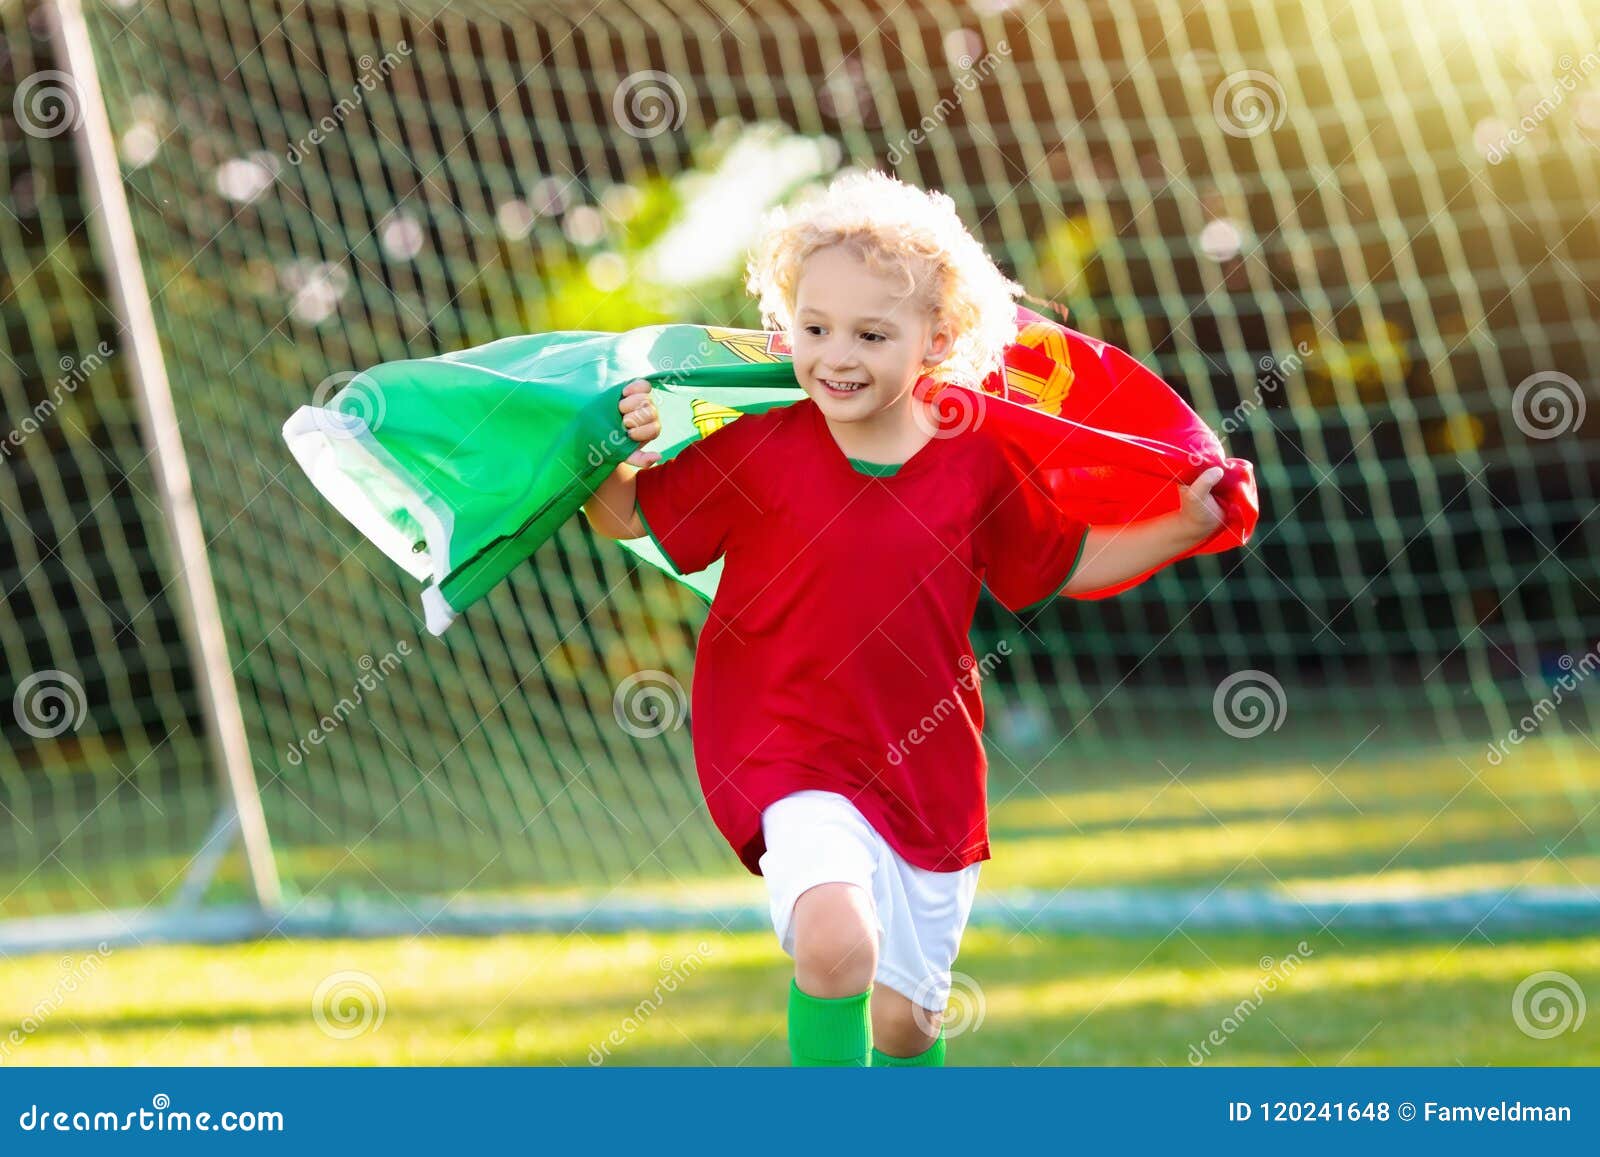 Portugal Football Fan Kids. Children Play Soccer. Stock Photo - Image ...